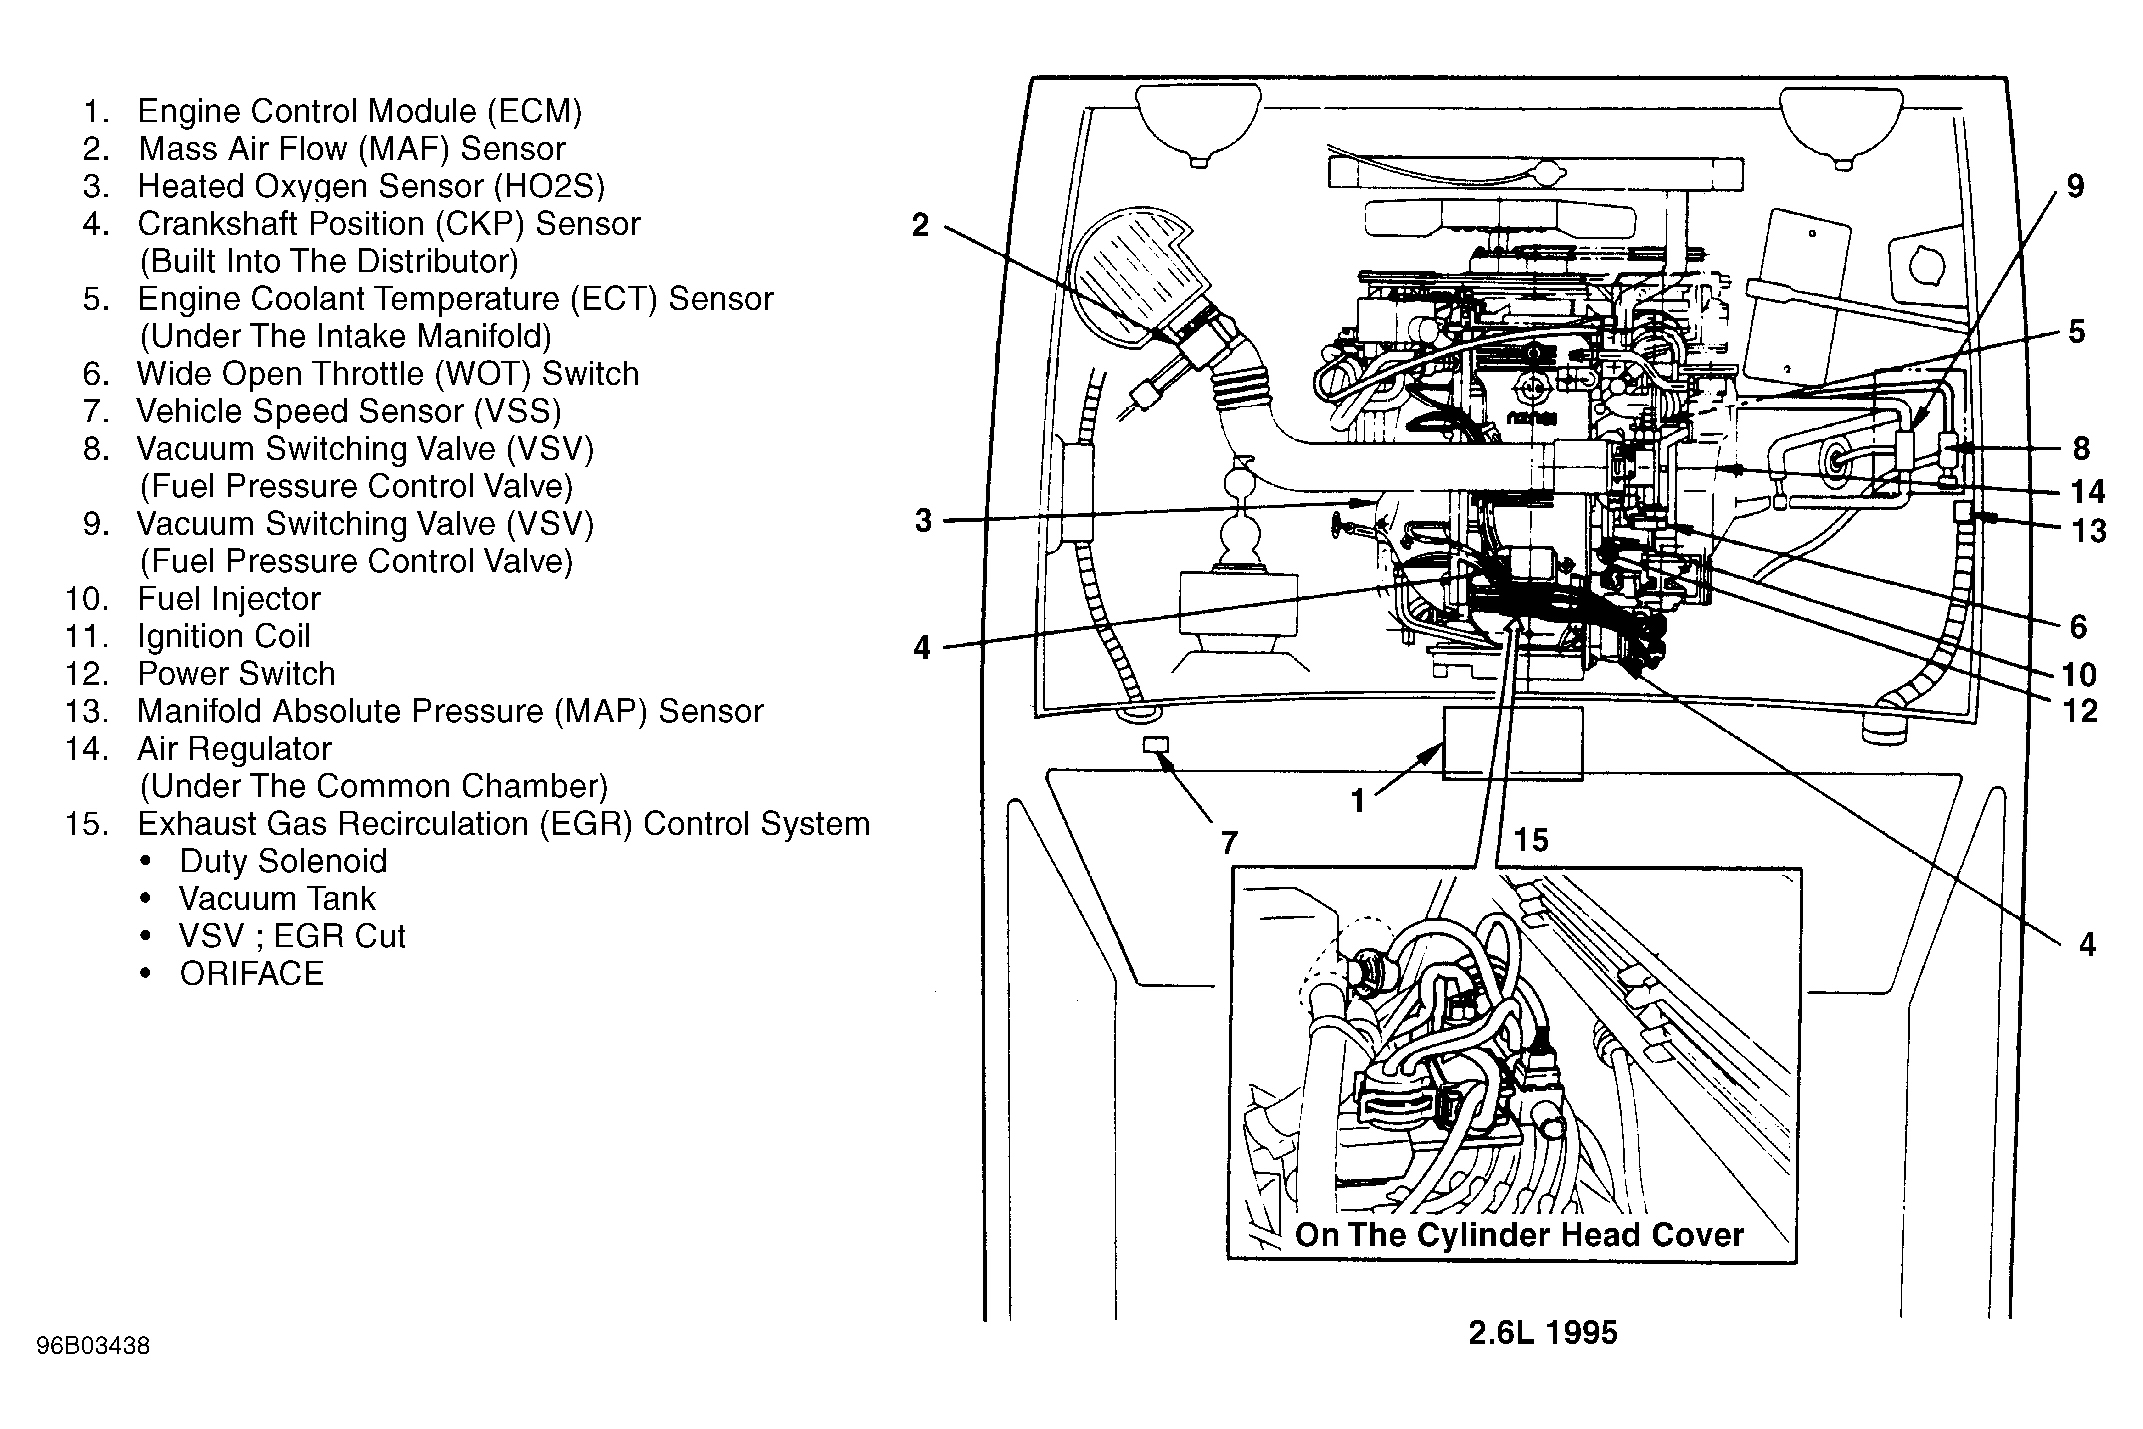 Isuzu Rodeo LS 1995 - Component Locations -  Engine Compartment (2.6L - 1995)